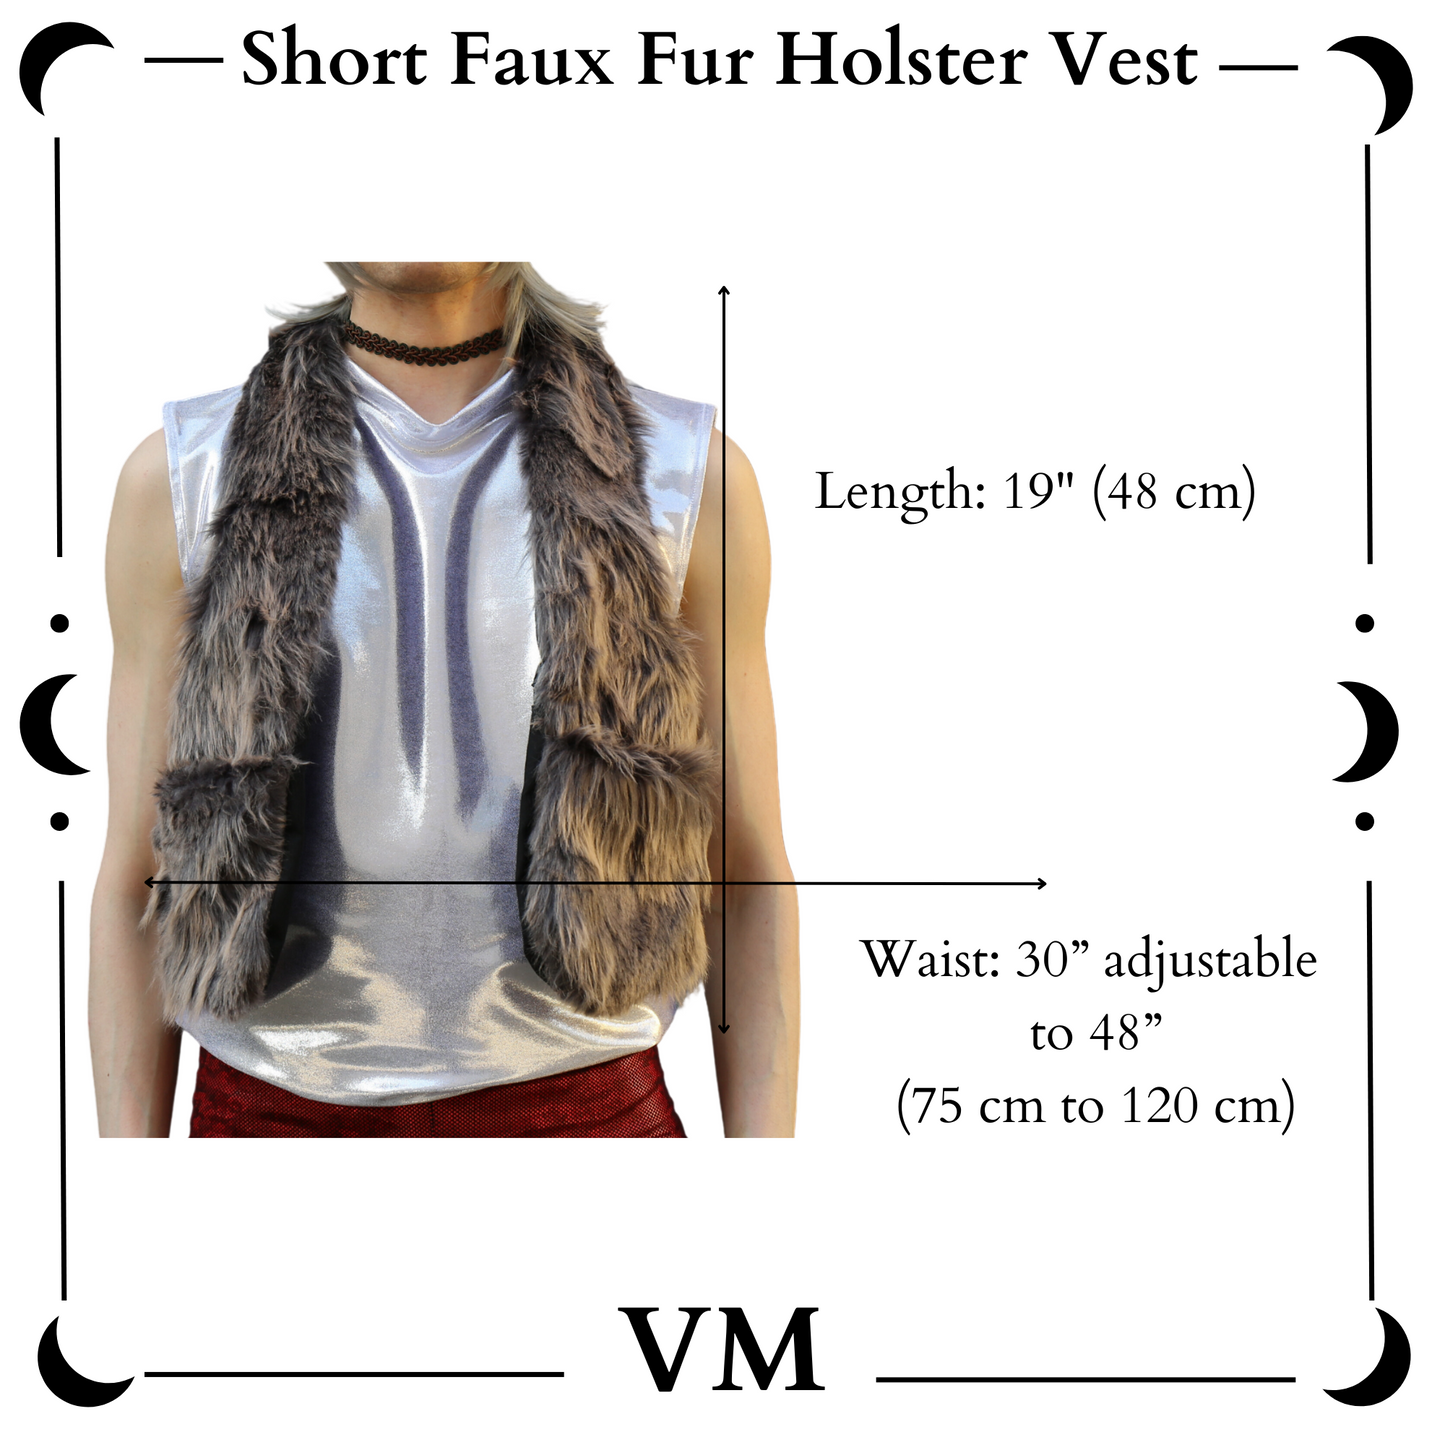 The VM Short Faux Fur Holster Vest